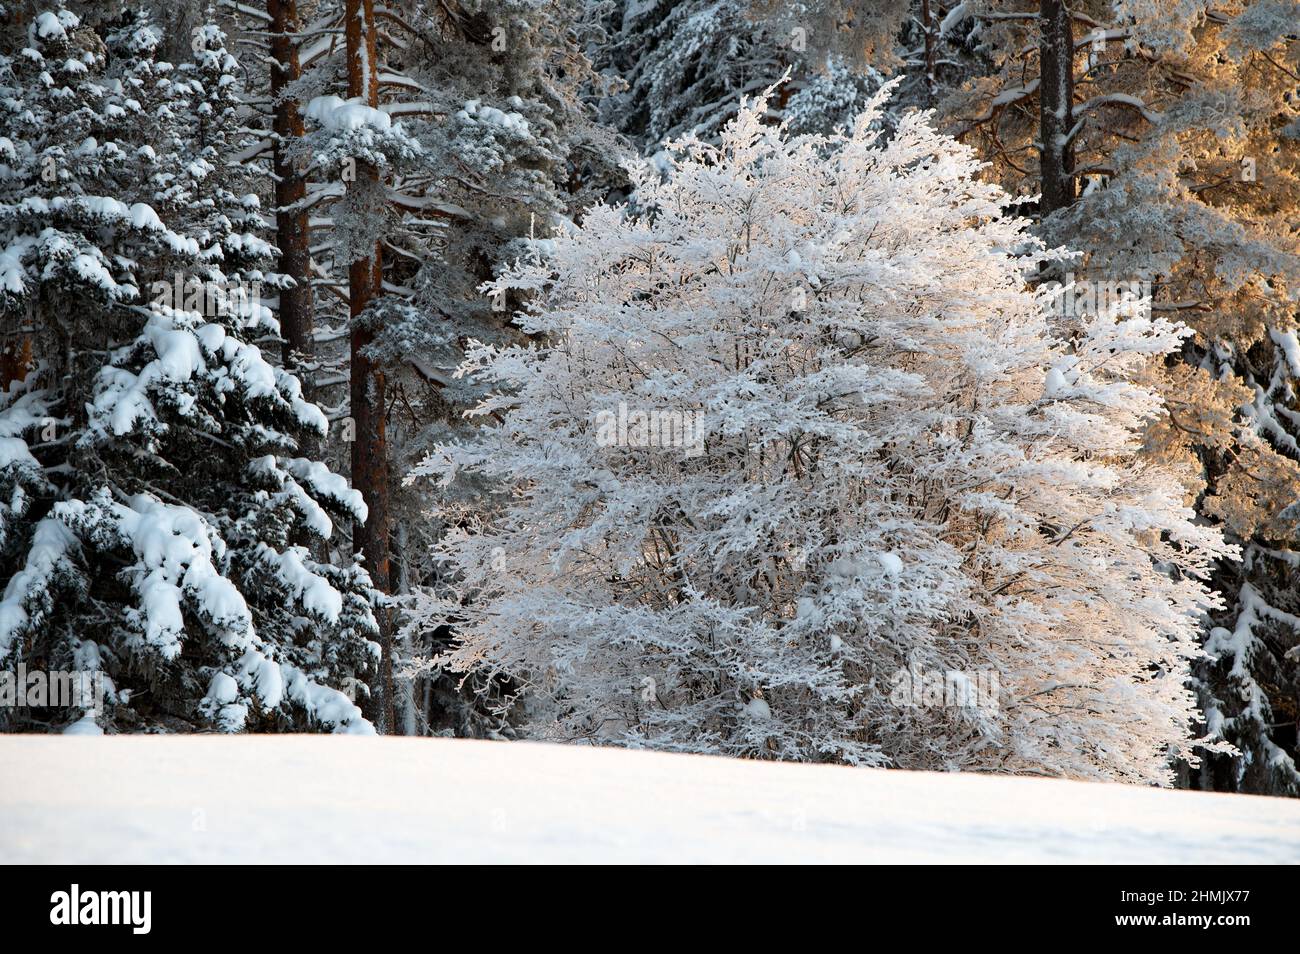 Snow covered shadbush, Amelanchier, in winter landscape Stock Photo